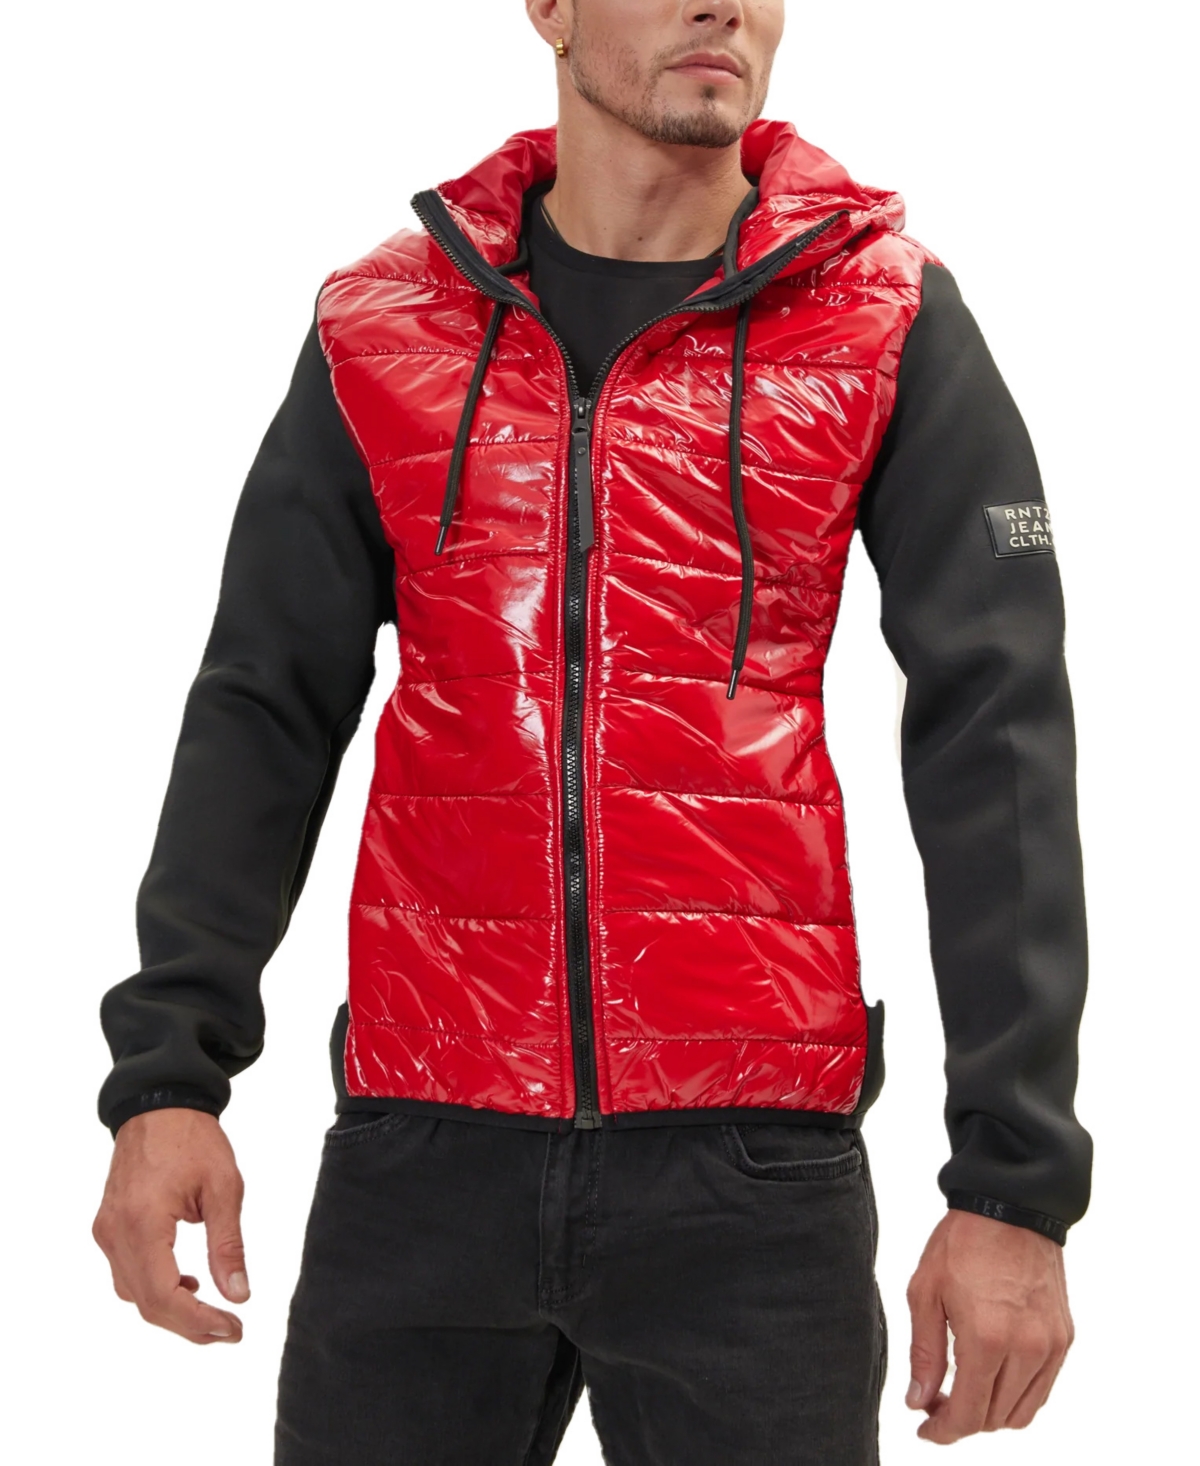 Men's Modern Sleeve Hooded Jacket - Red